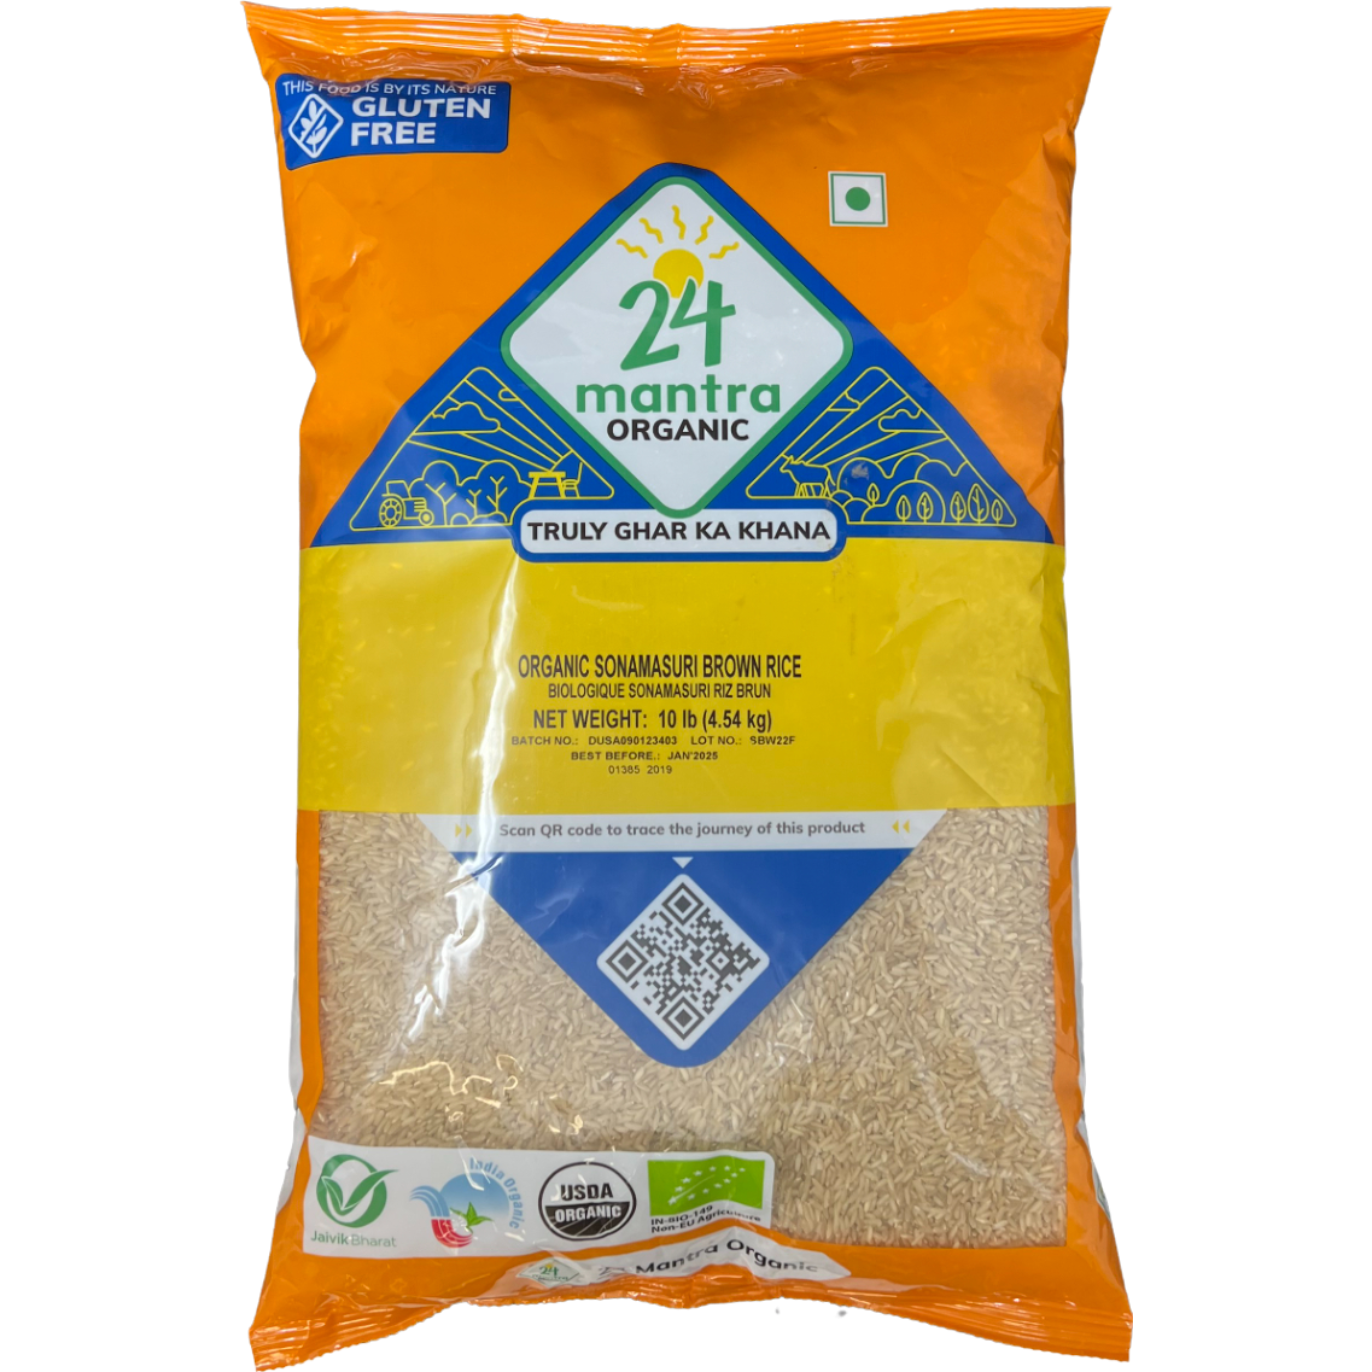 24 Mantra Organic Sonamasuri Brown Rice - 10 Lb (4.5 Kg)